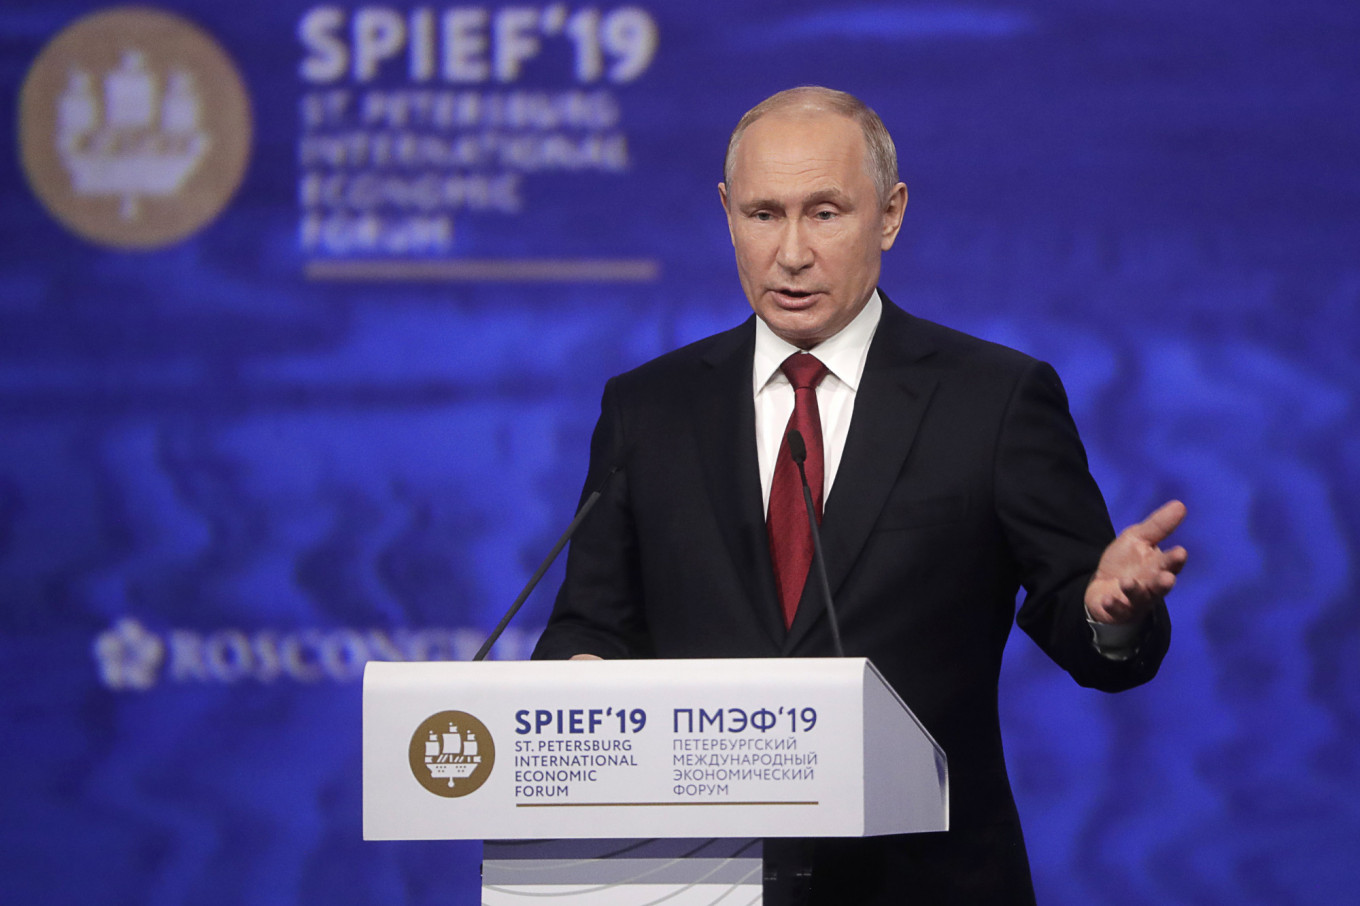 Putin Talks Tough in St. Petersburg Forum Address – Highlights - The ...